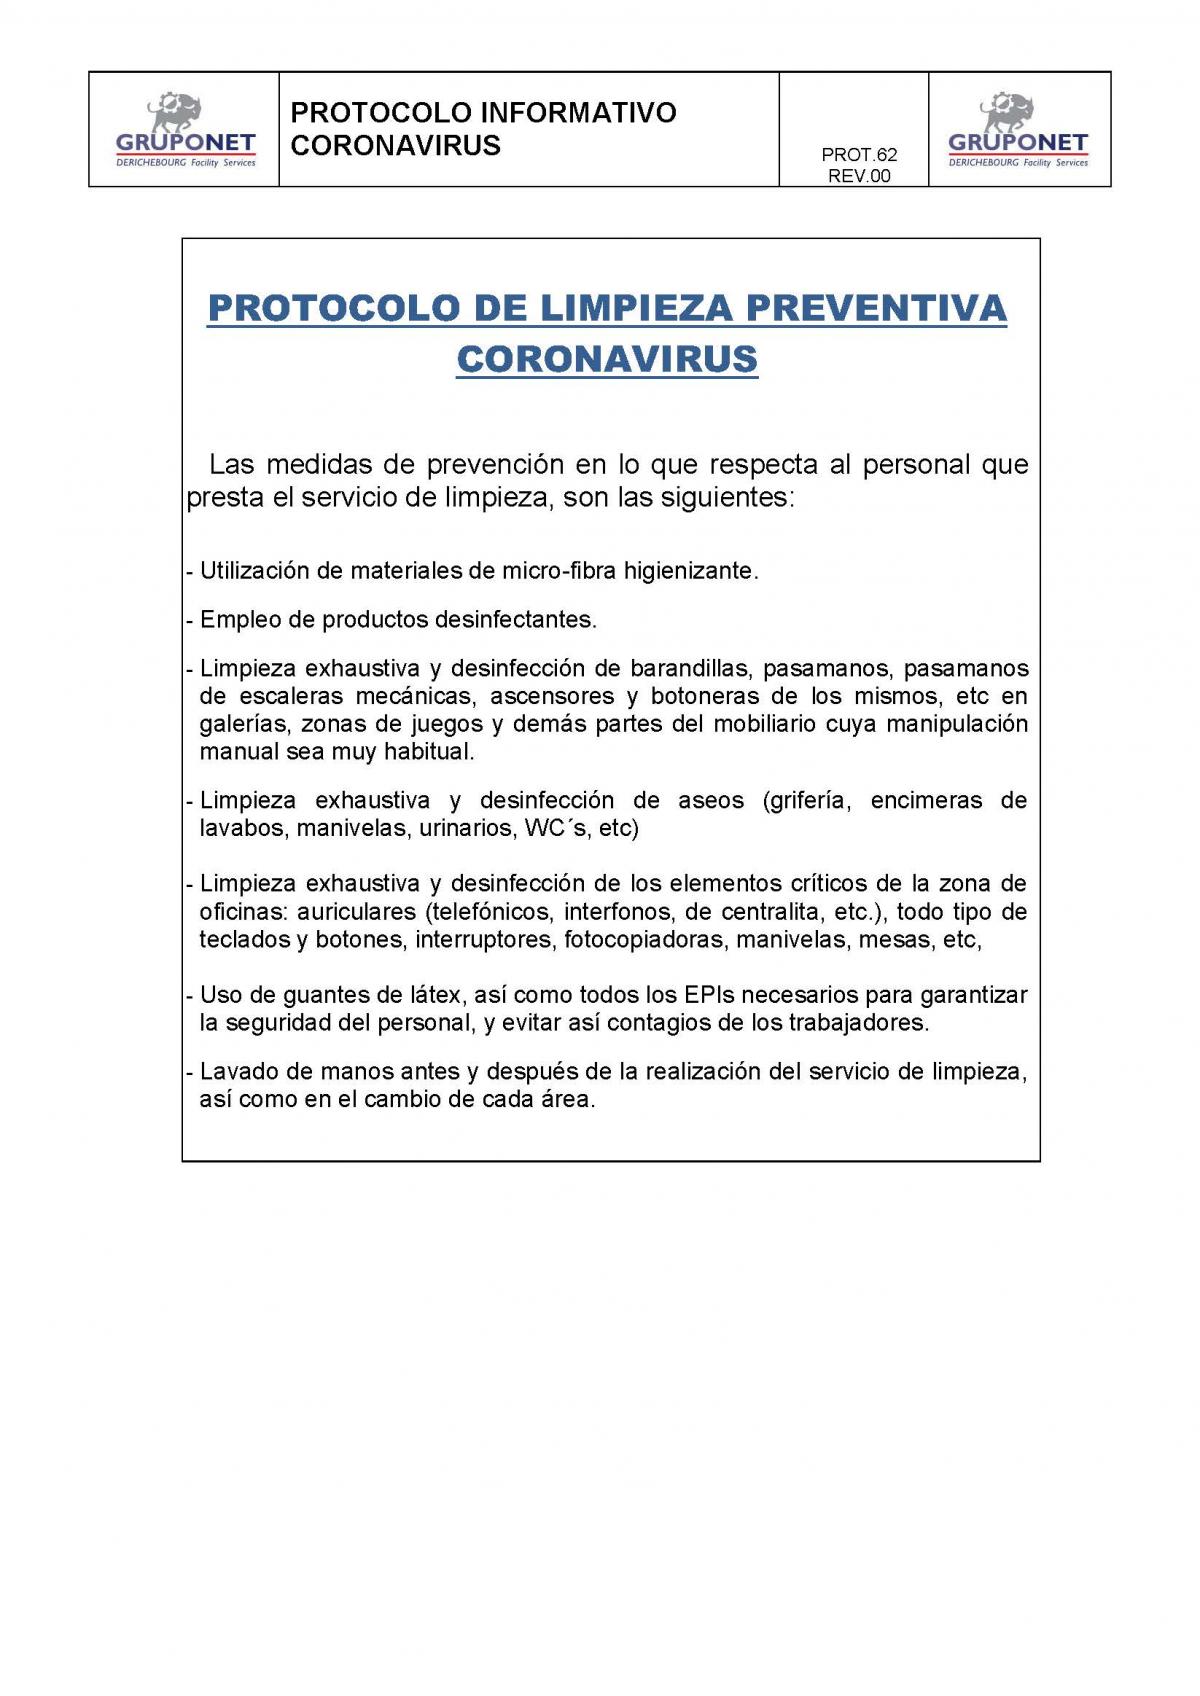 Protocolo de limpieza preventiva coronavirus